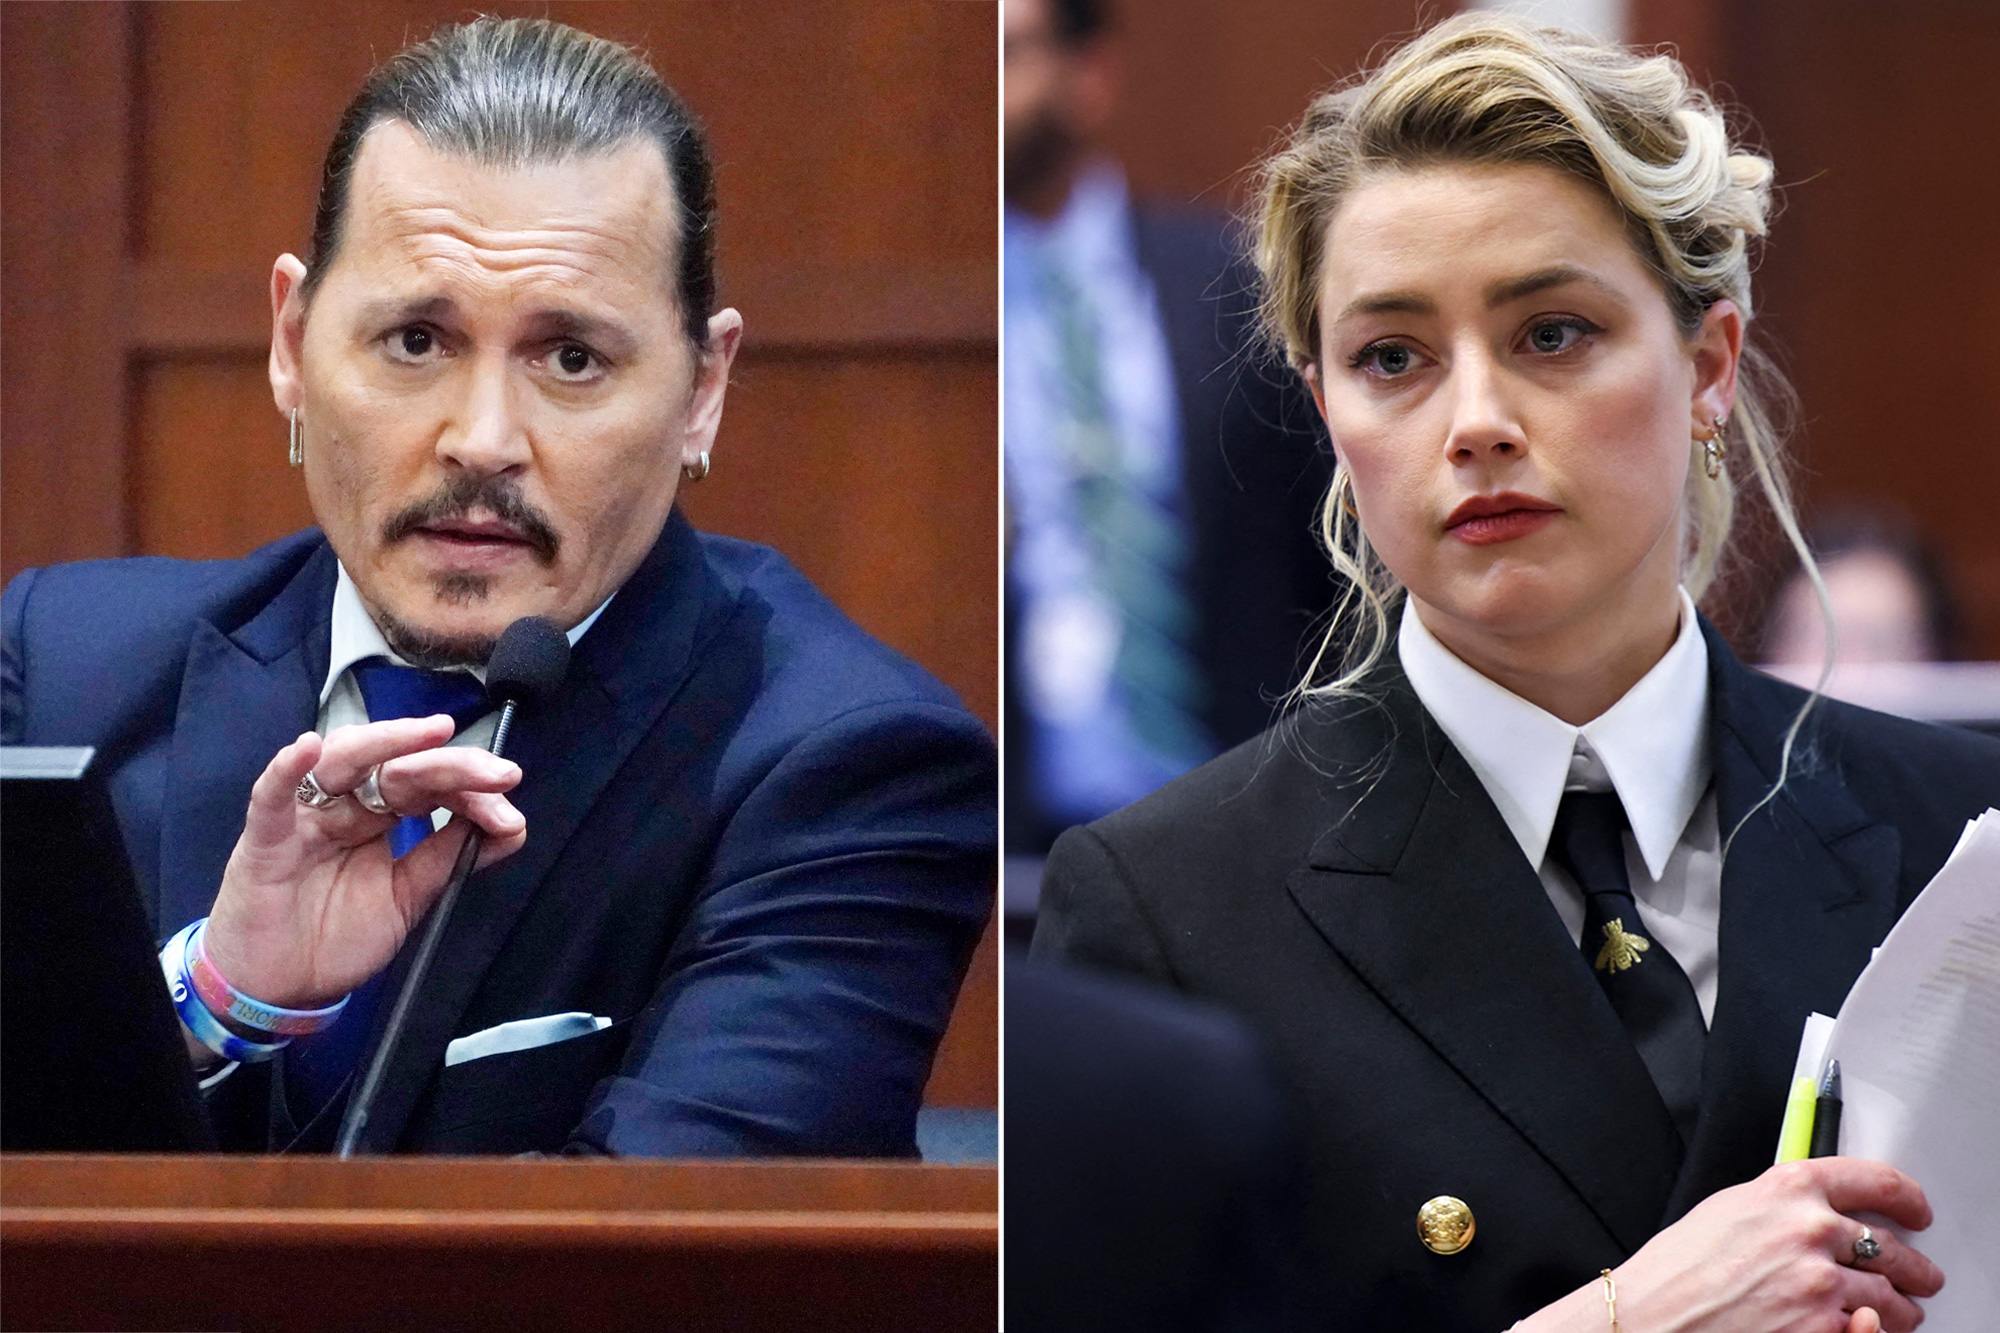 Johnny Depp and Amber Heard prenup